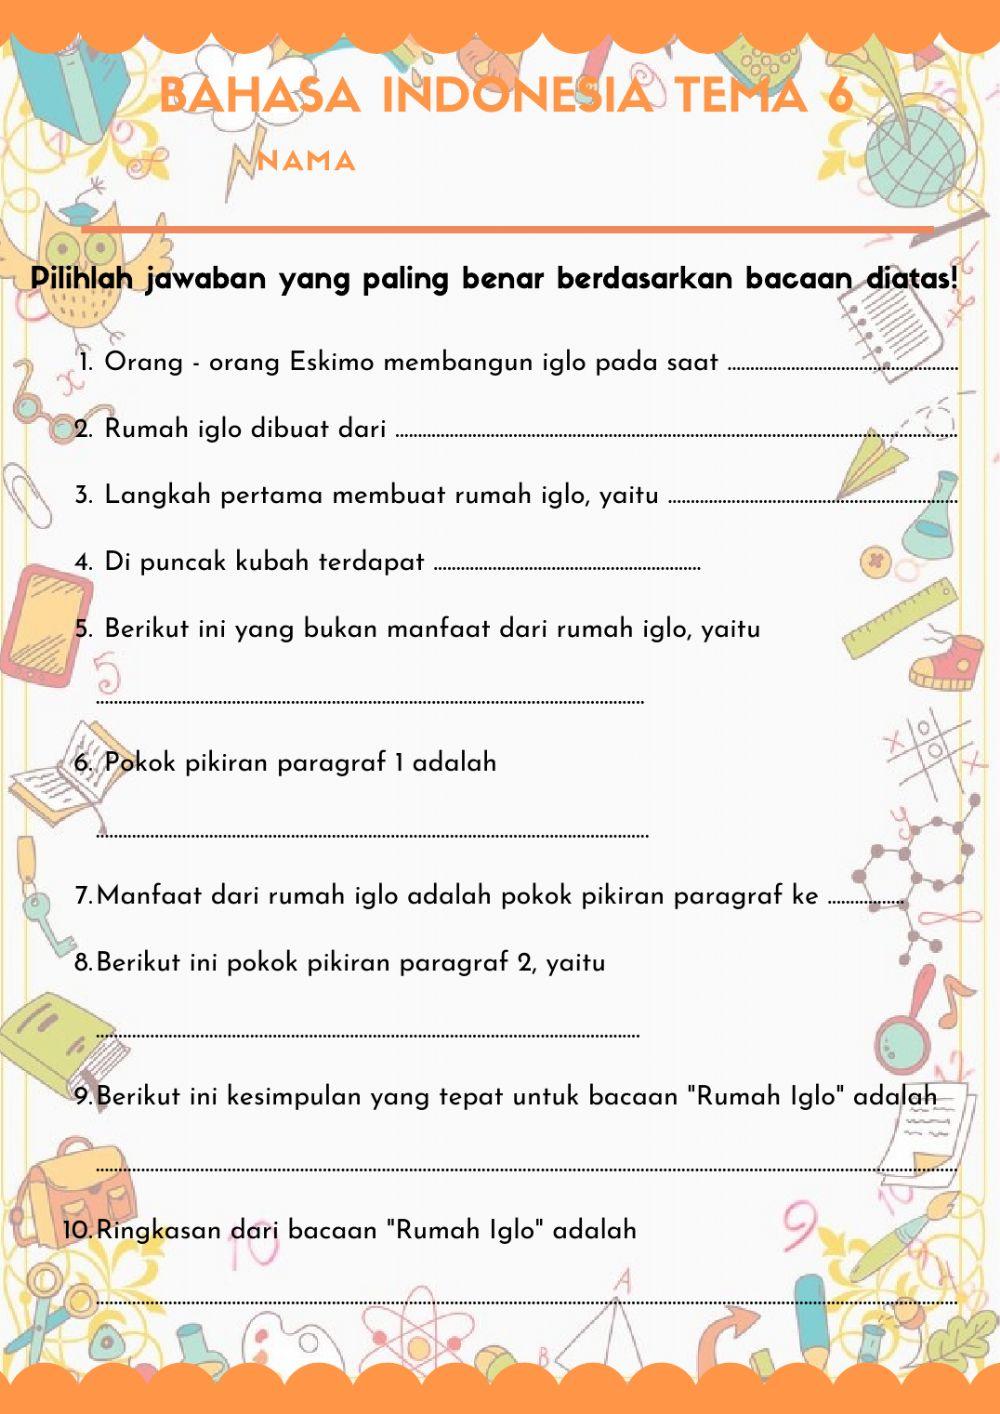 Bahasa Indonesia Tema 6